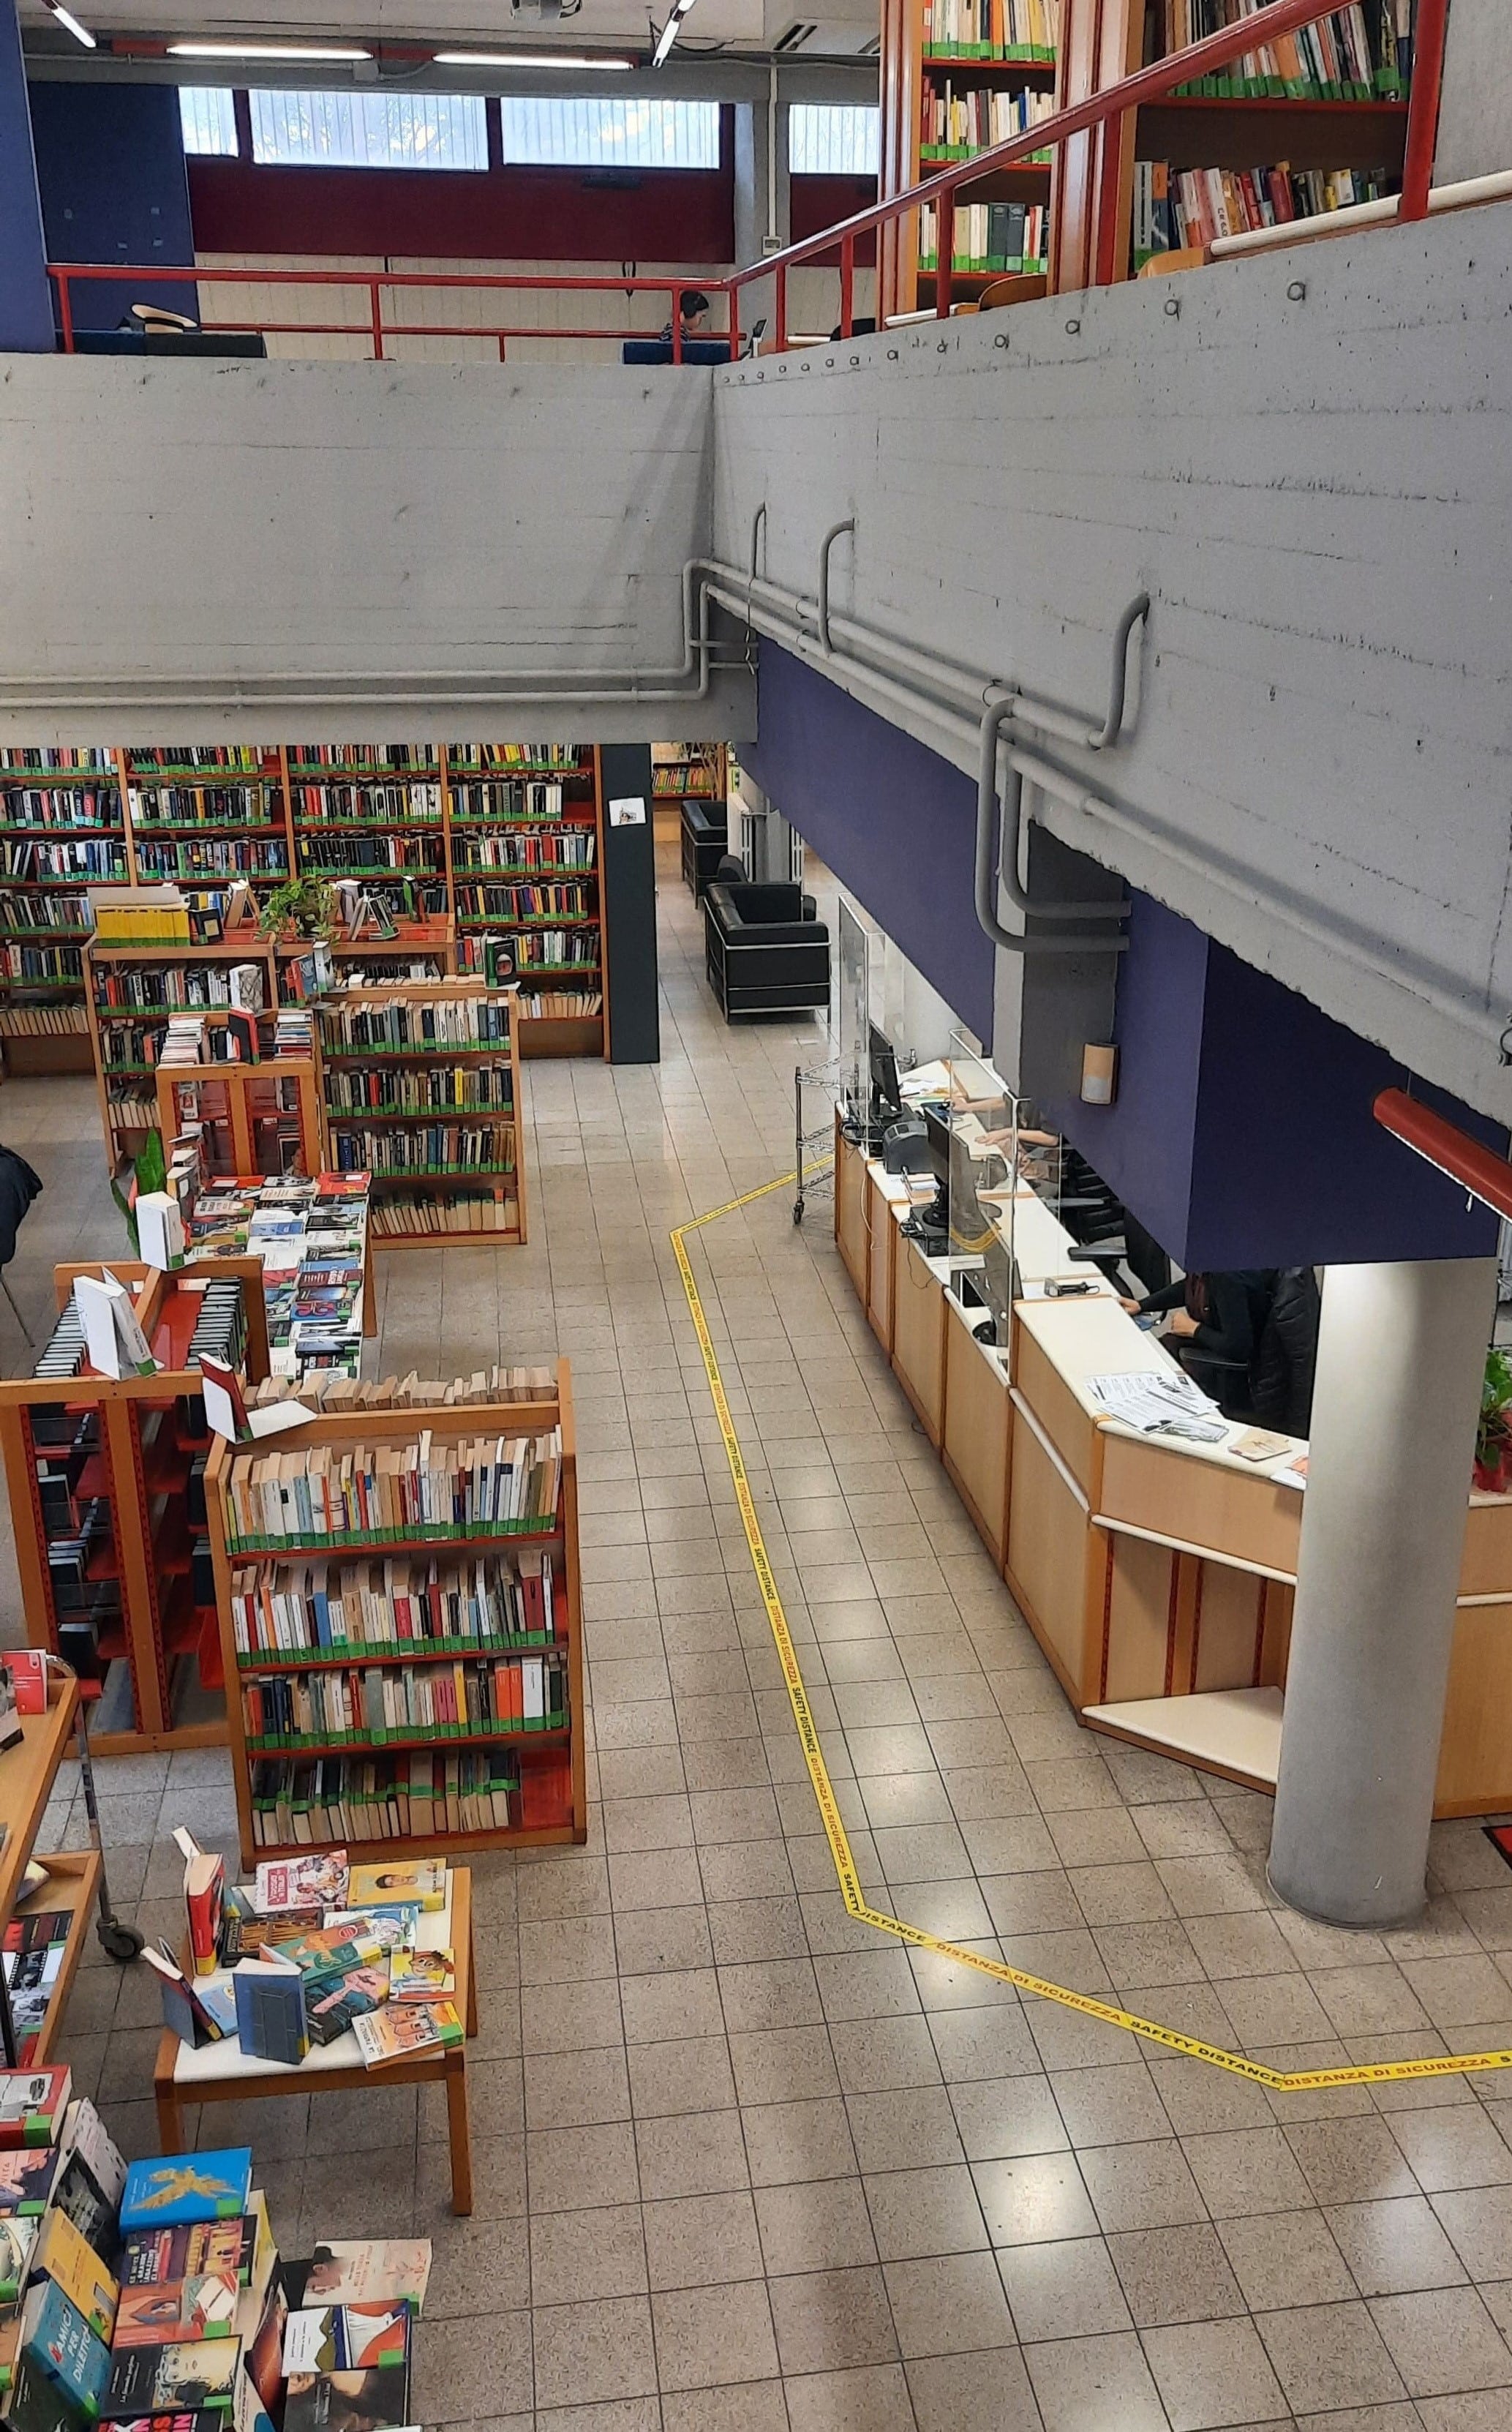 Biblioteca Valle Aurelia